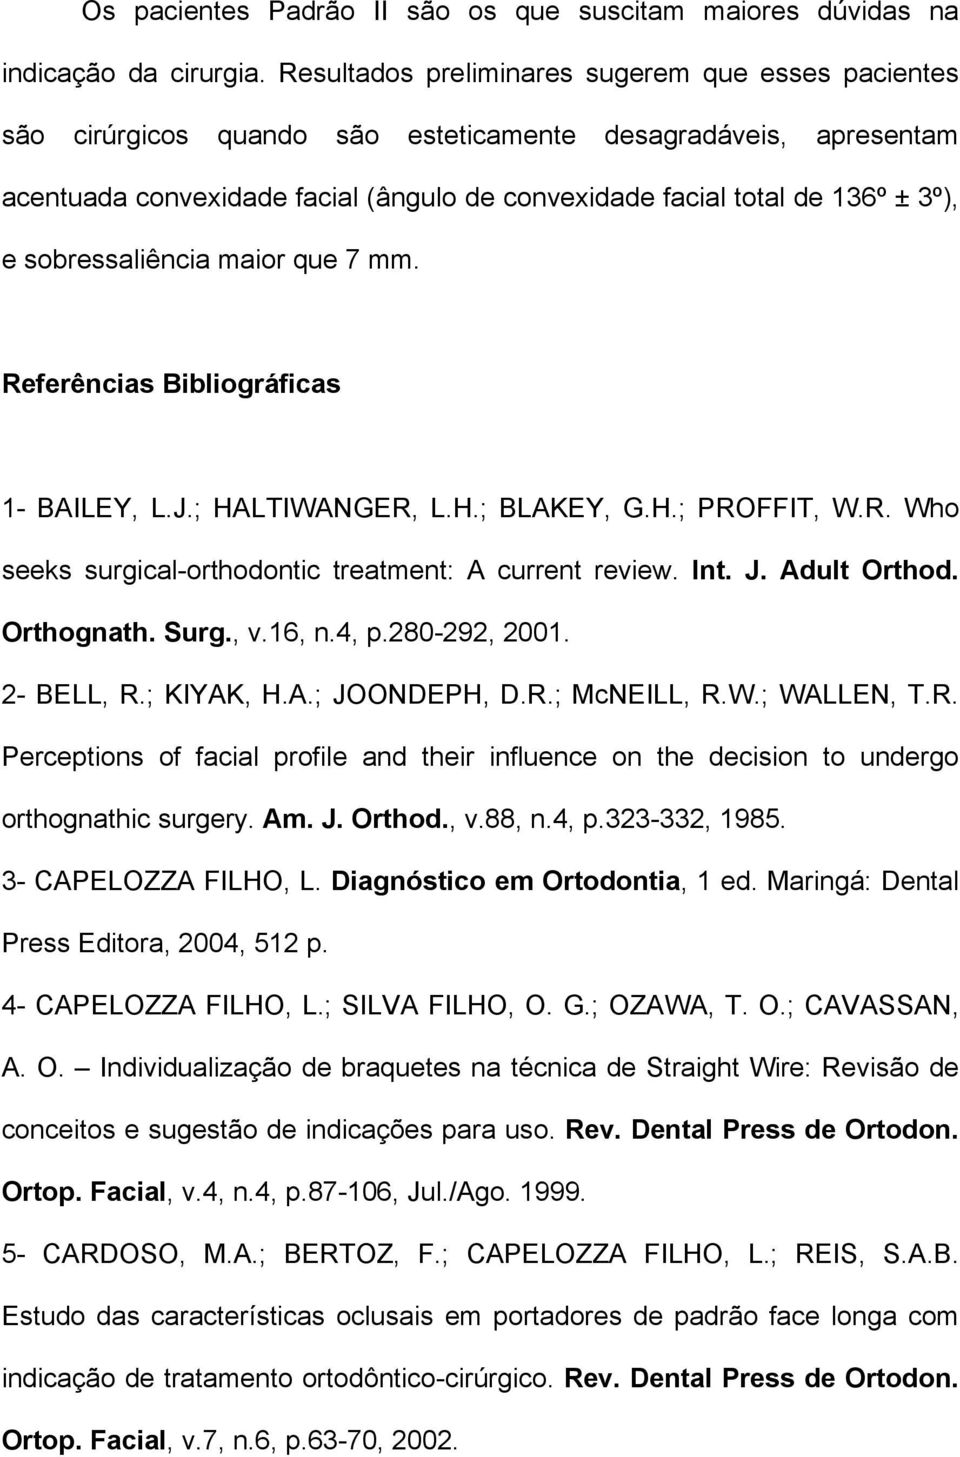 sobressaliência maior que 7 mm. Referências Bibliográficas 1- BAILEY, L.J.; HALTIWANGER, L.H.; BLAKEY, G.H.; PROFFIT, W.R. Who seeks surgical-orthodontic treatment: A current review. Int. J.